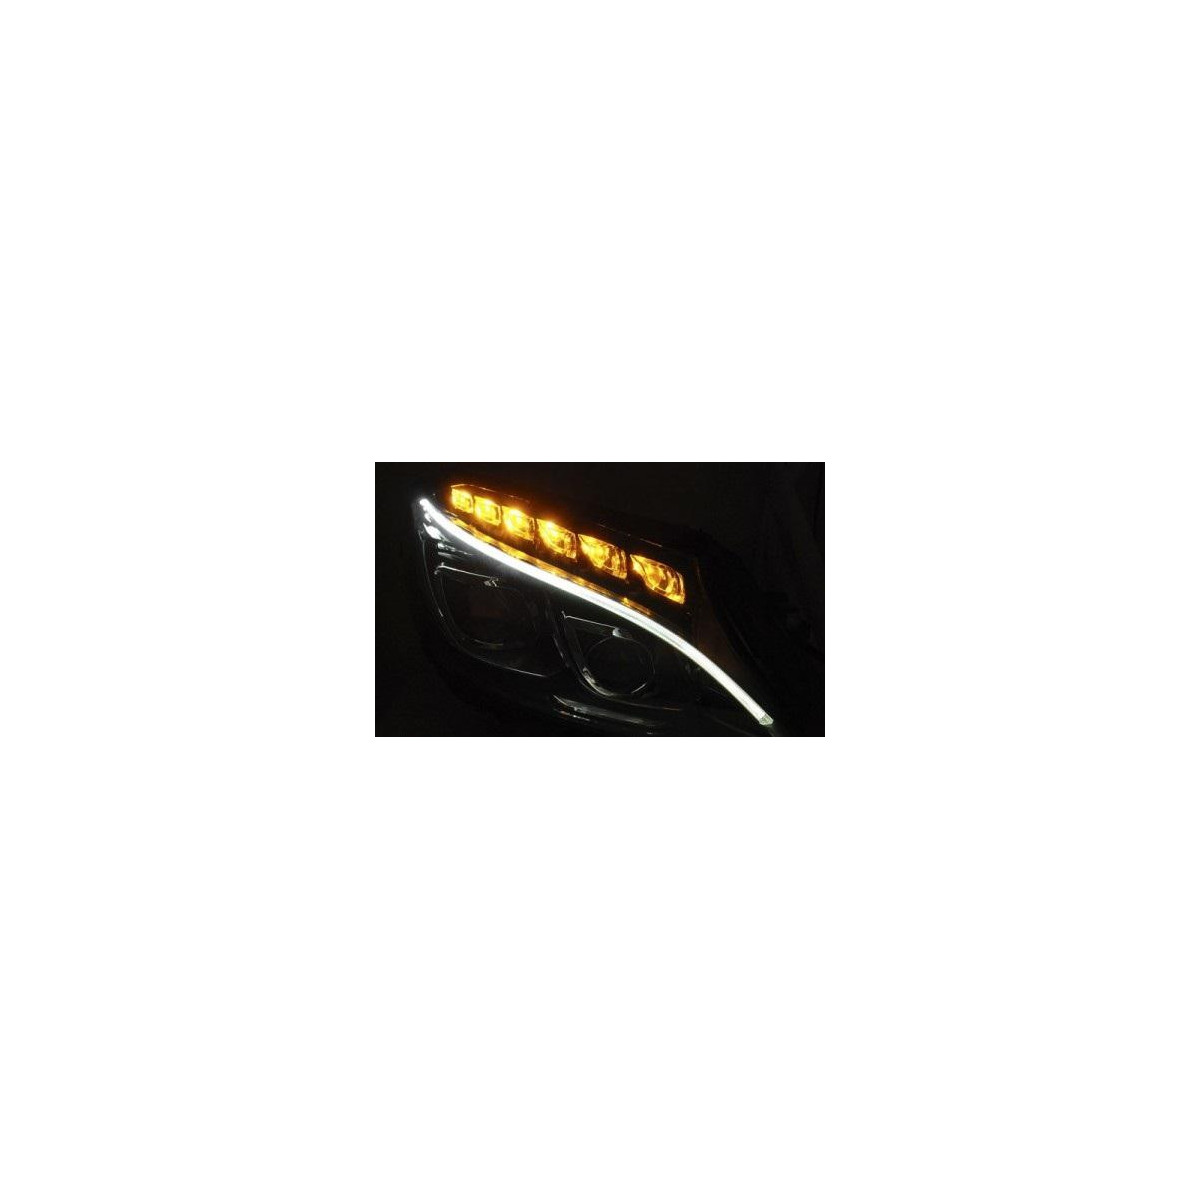 LAMPY MERCEDES W205 14-18 BLACK LED DRL